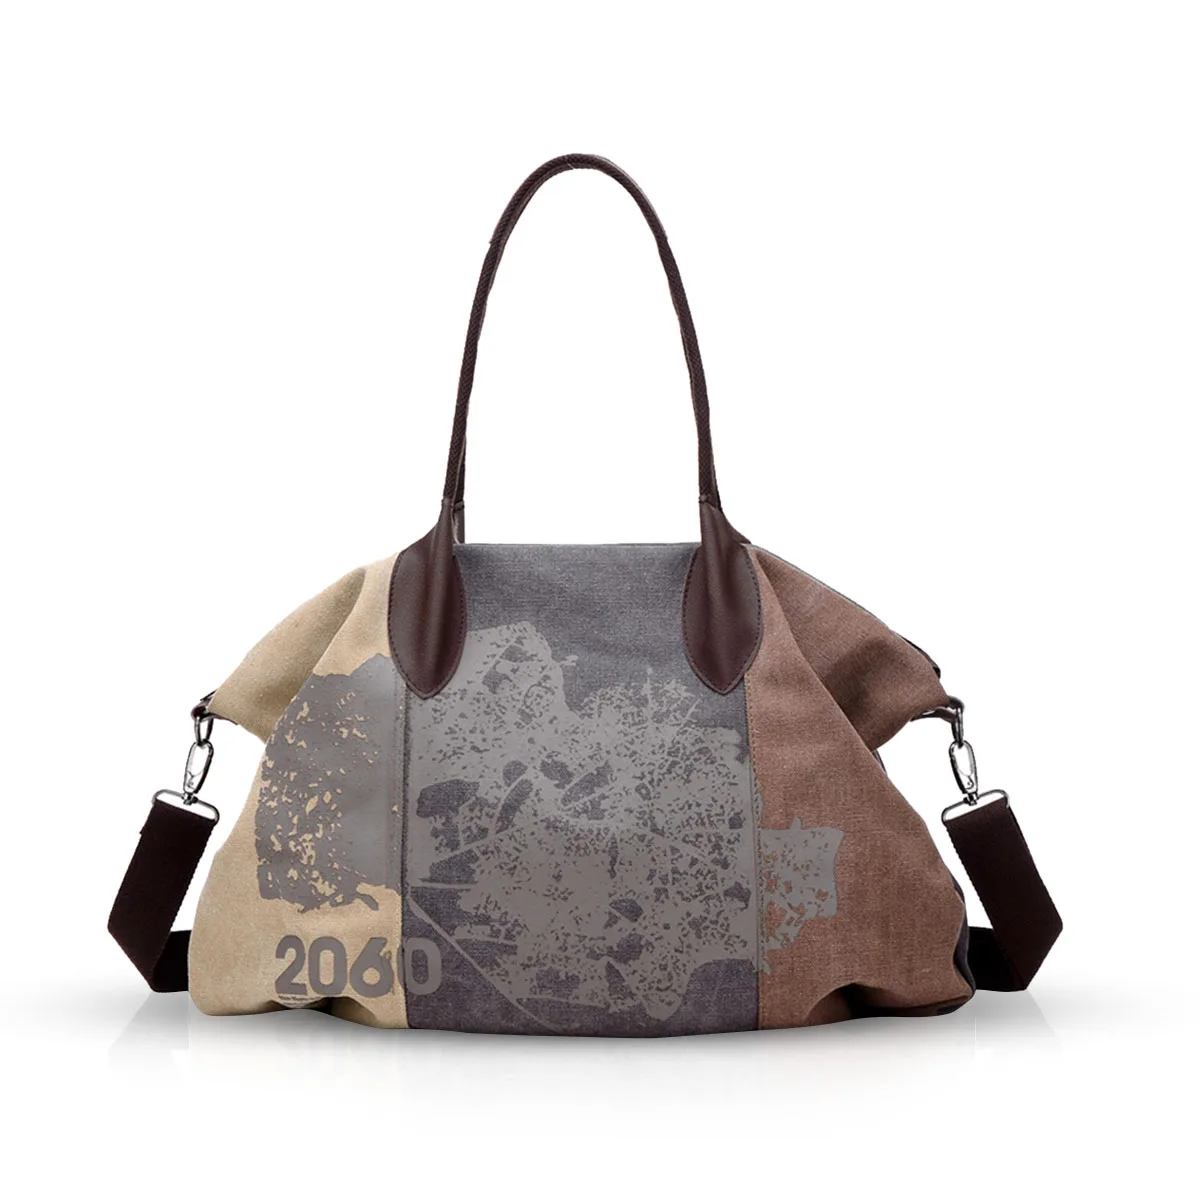 NICOLE&DORIS Canvas Tote Bags for Women Large Handbag Shoulder Bags Ladies Hobo Bag for Women 